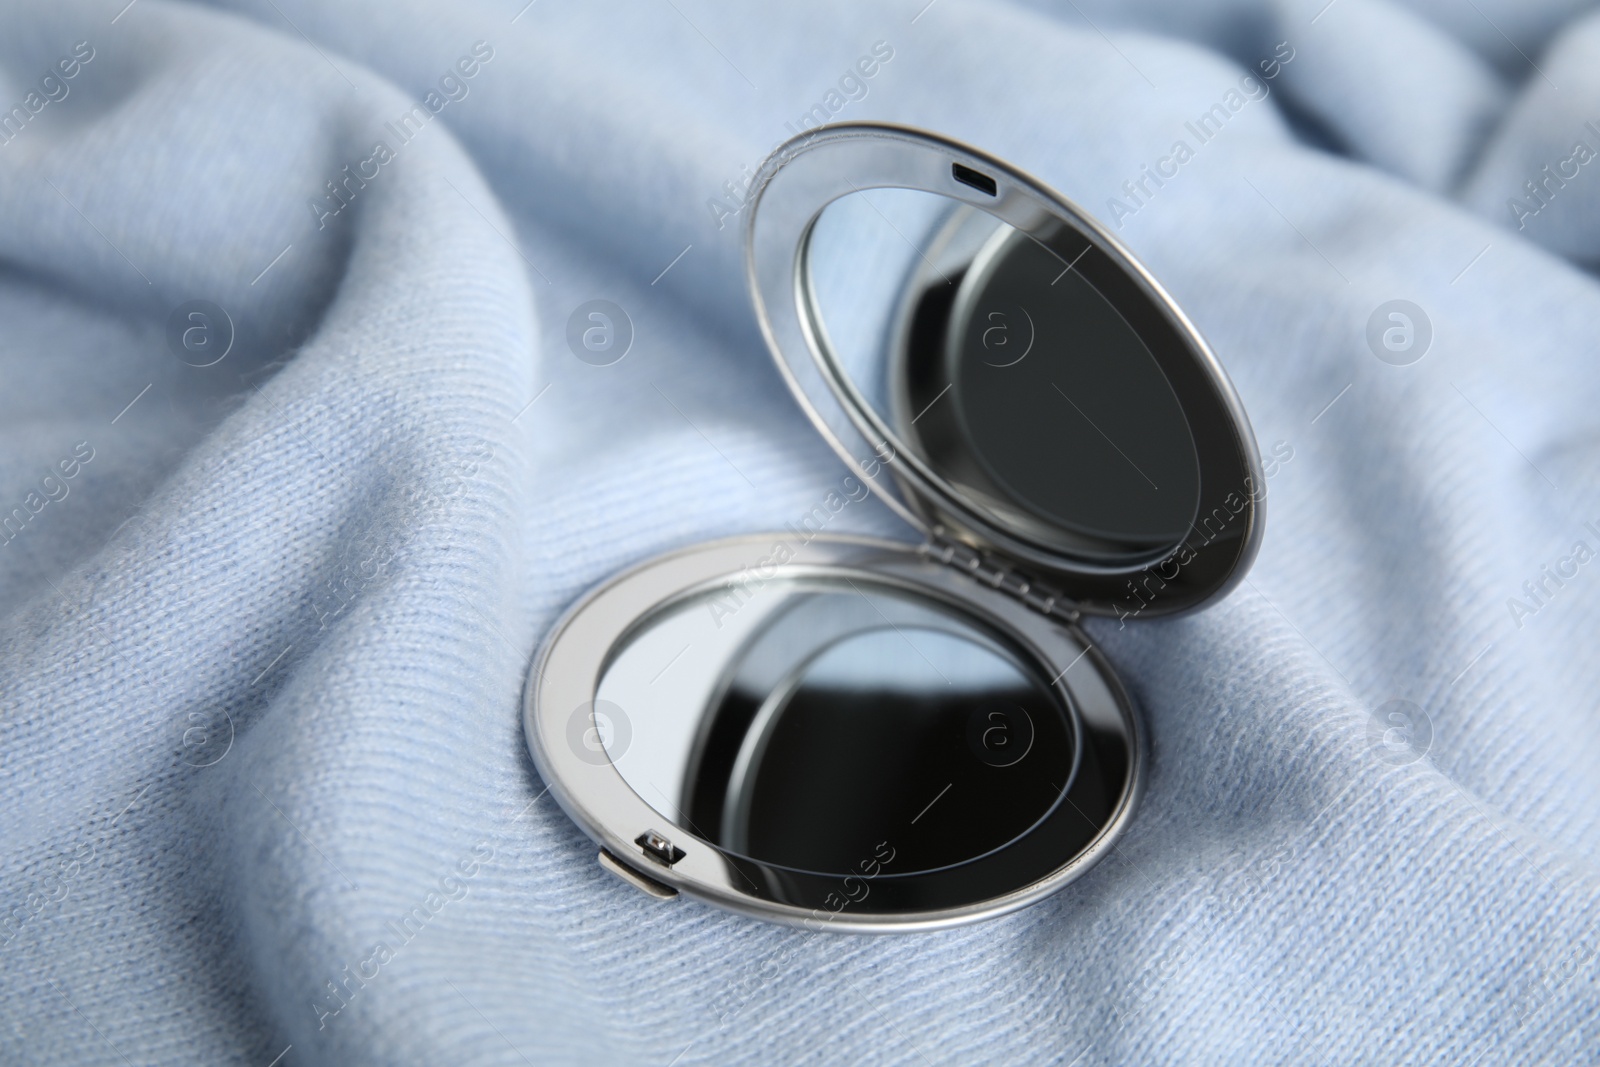 Photo of Stylish cosmetic pocket mirror on light blue fabric